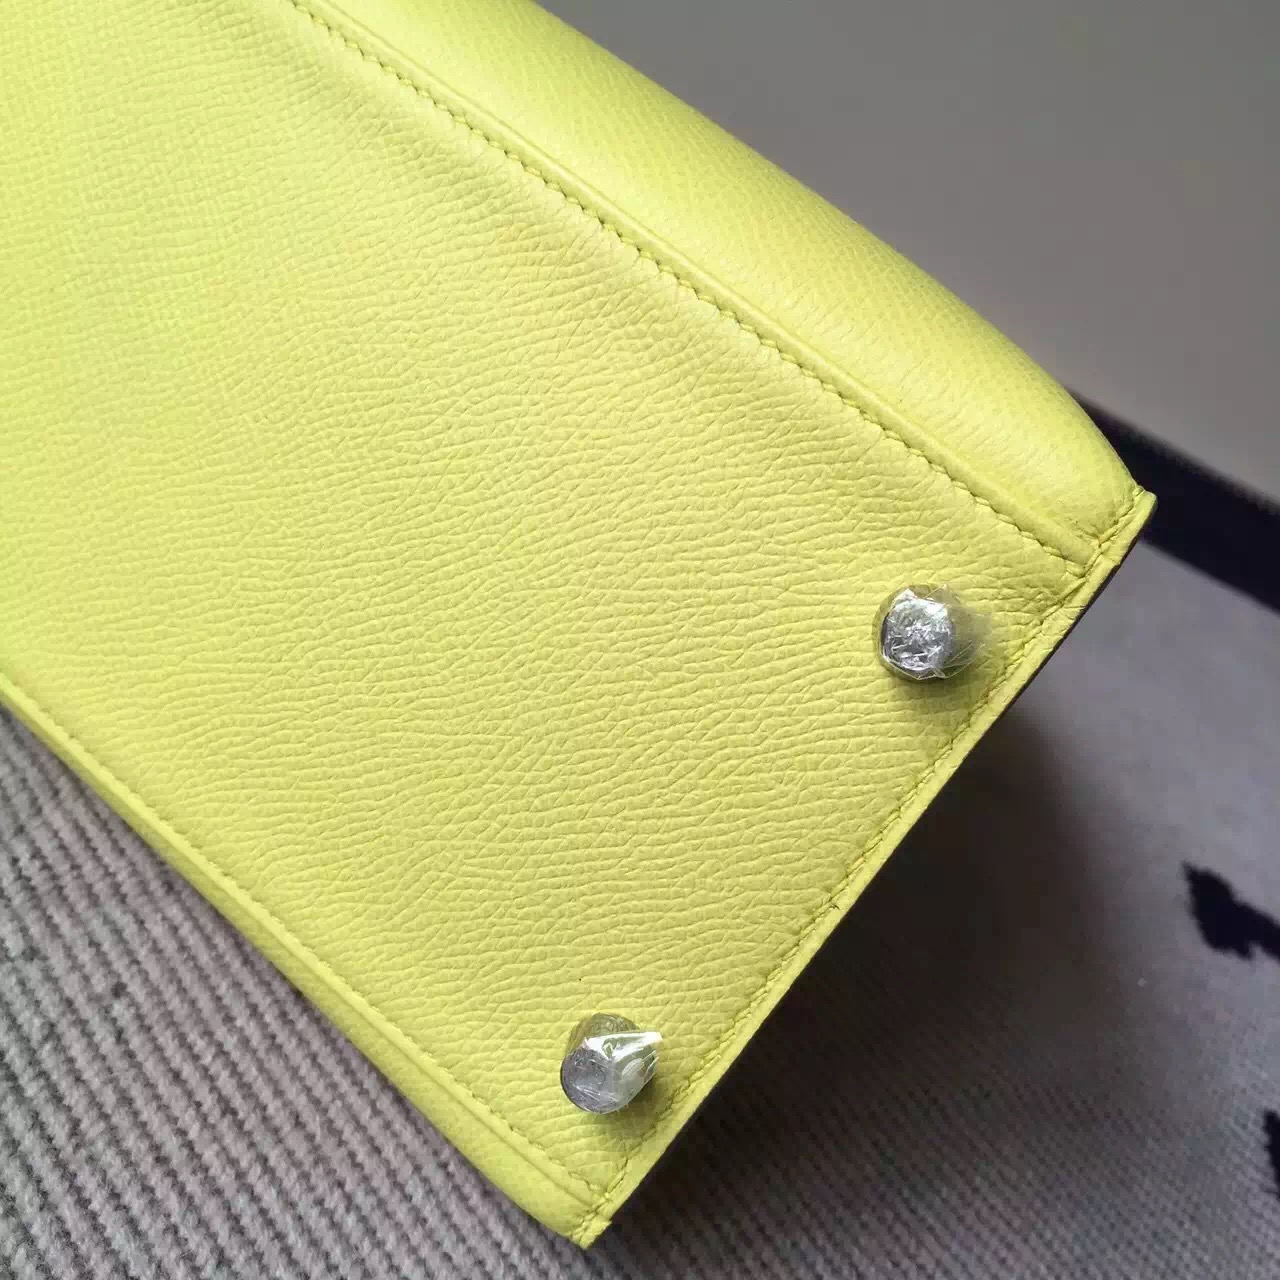 Sale Hermes Bag Epsom Leather Kelly Bag 28cm in Yellow